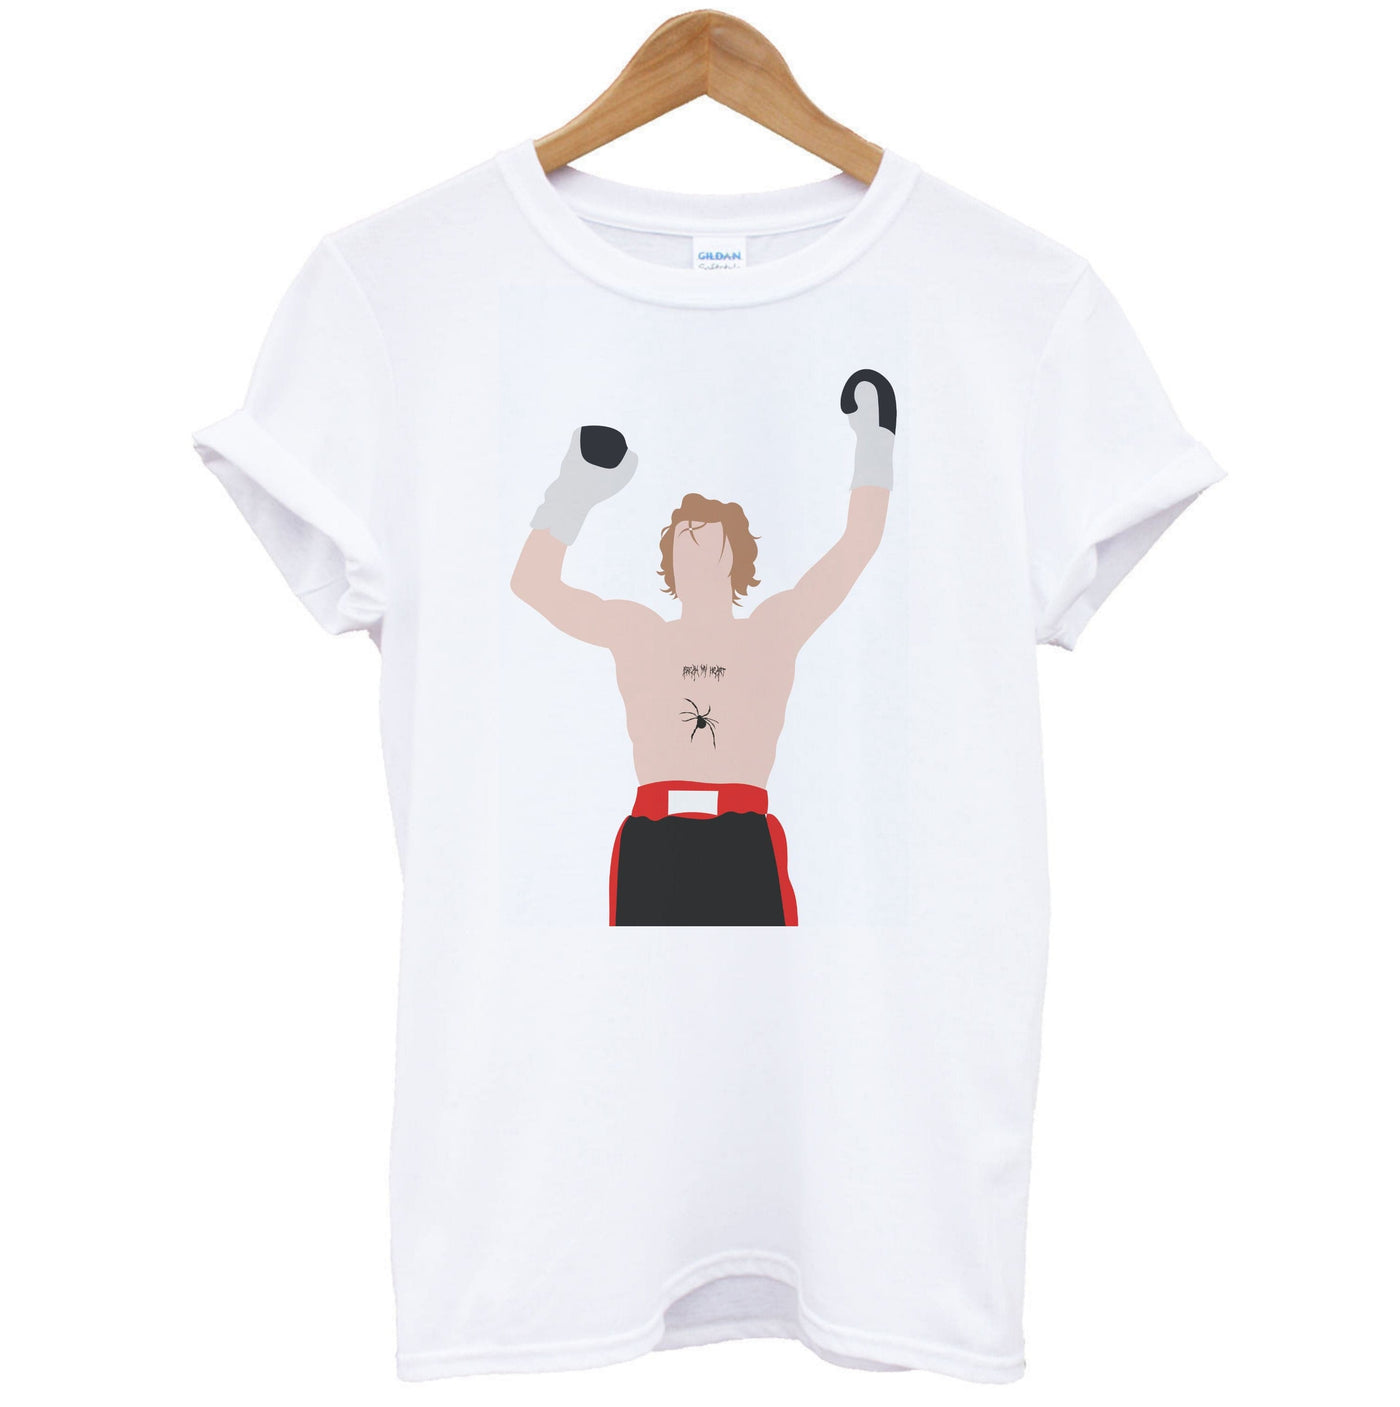 Boxing - Vinnie Hacker T-Shirt